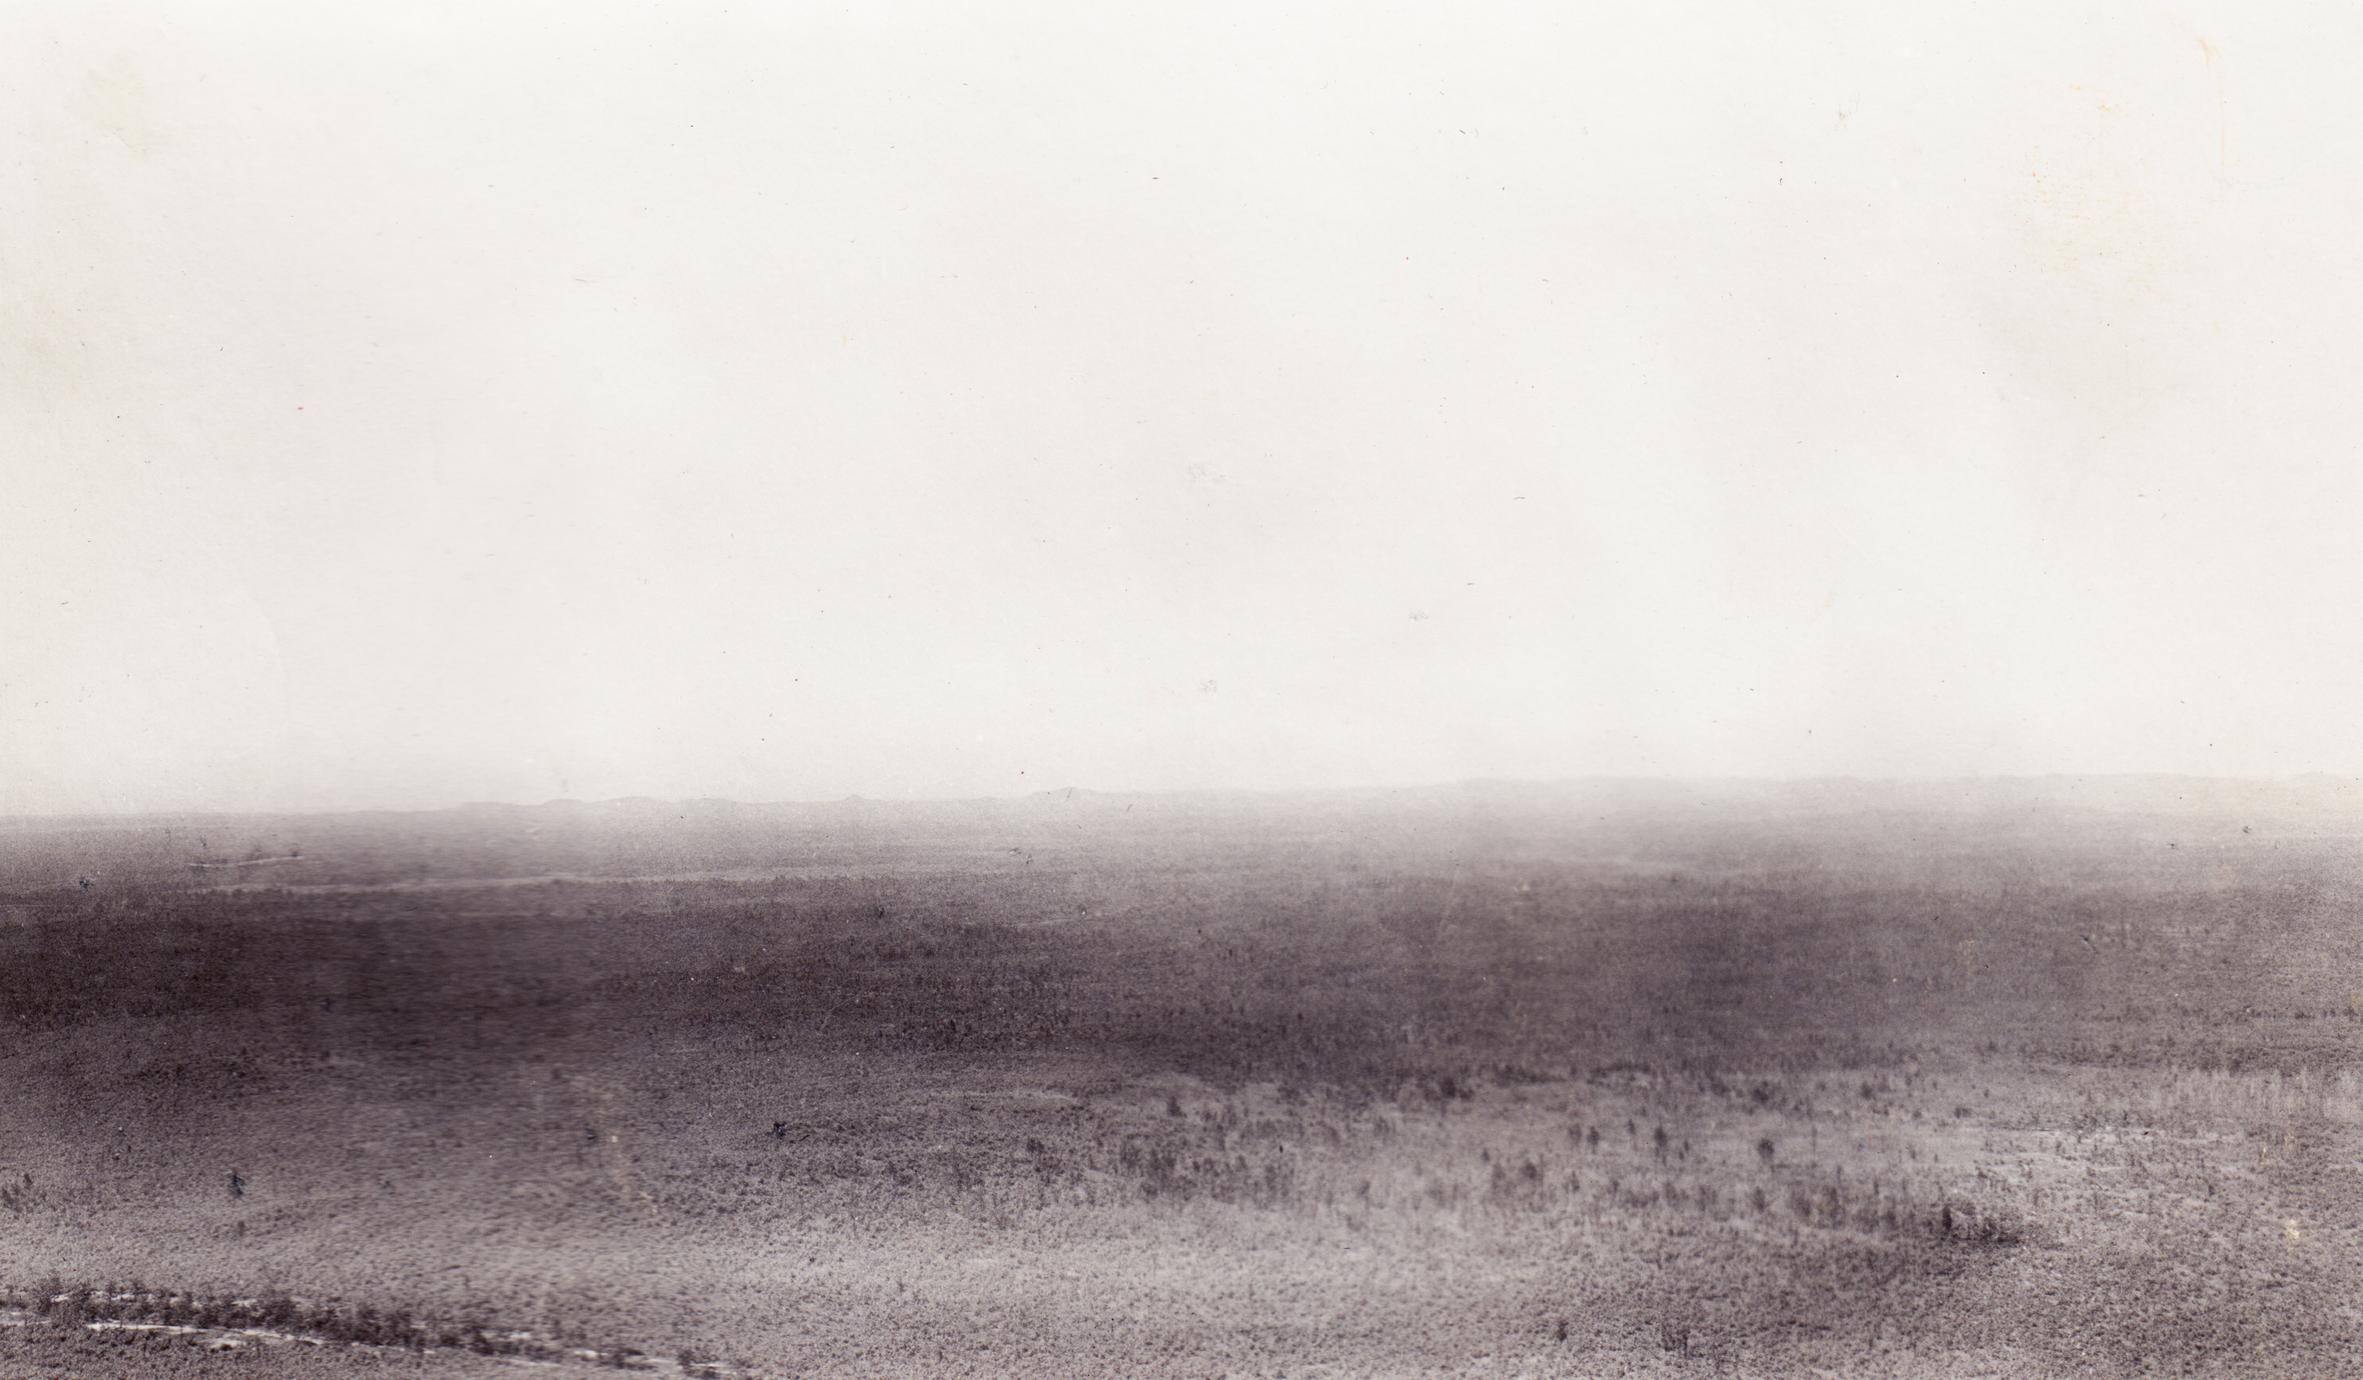 View of Long Mound from Saddle Mound